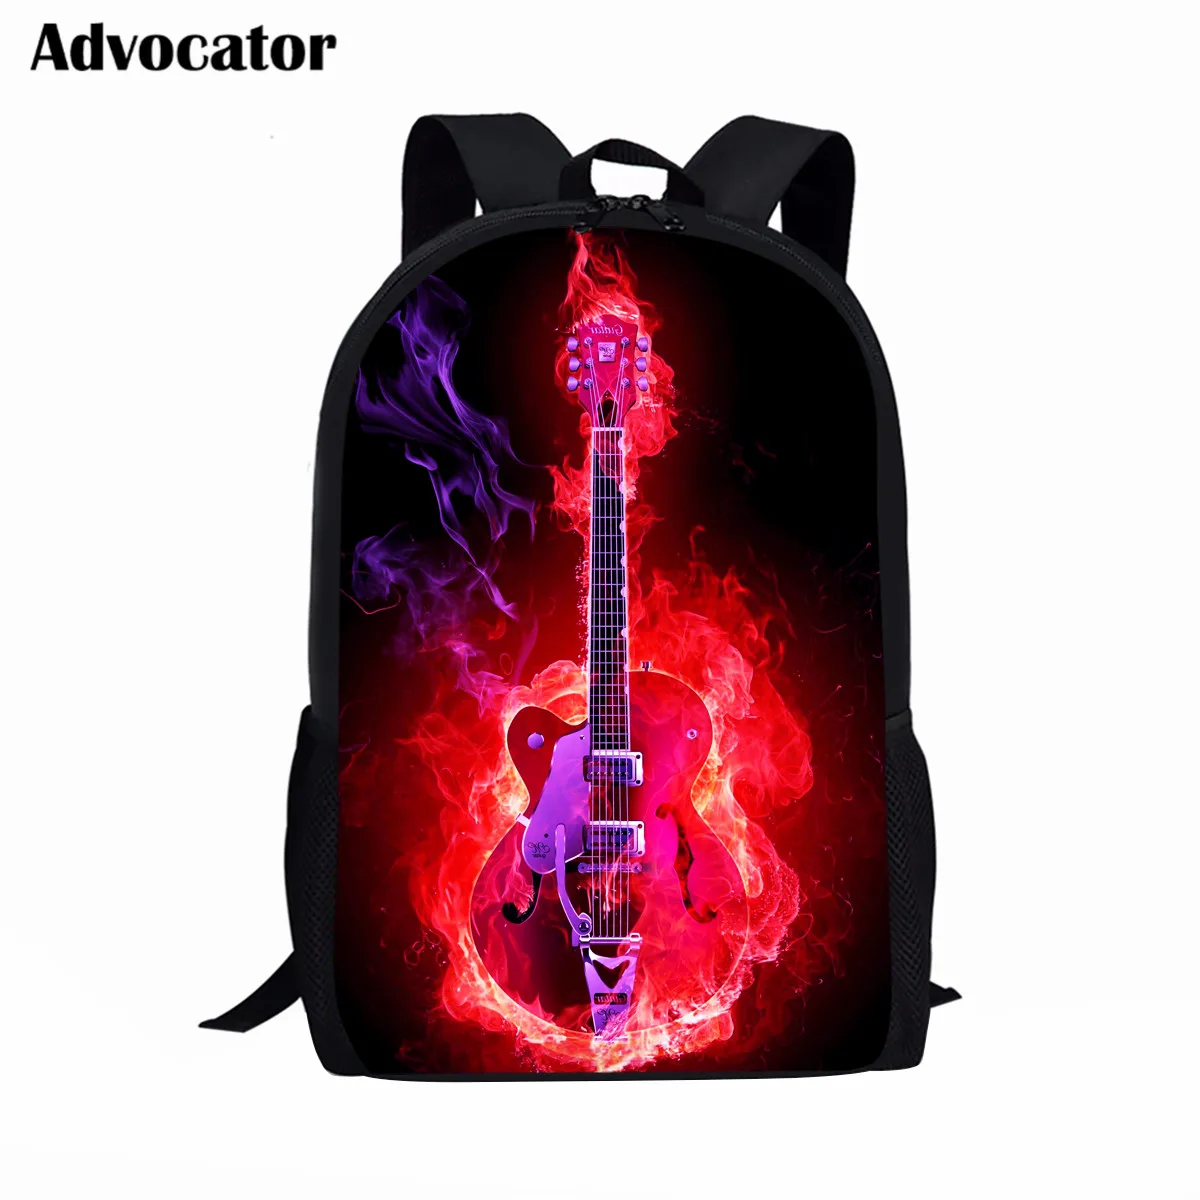 

Advocator DJ Audio Electronic Guitar Rock-n-roll Pattern Schoolbags for Teenager Waterproof School Bags Boys Backpack Satchel